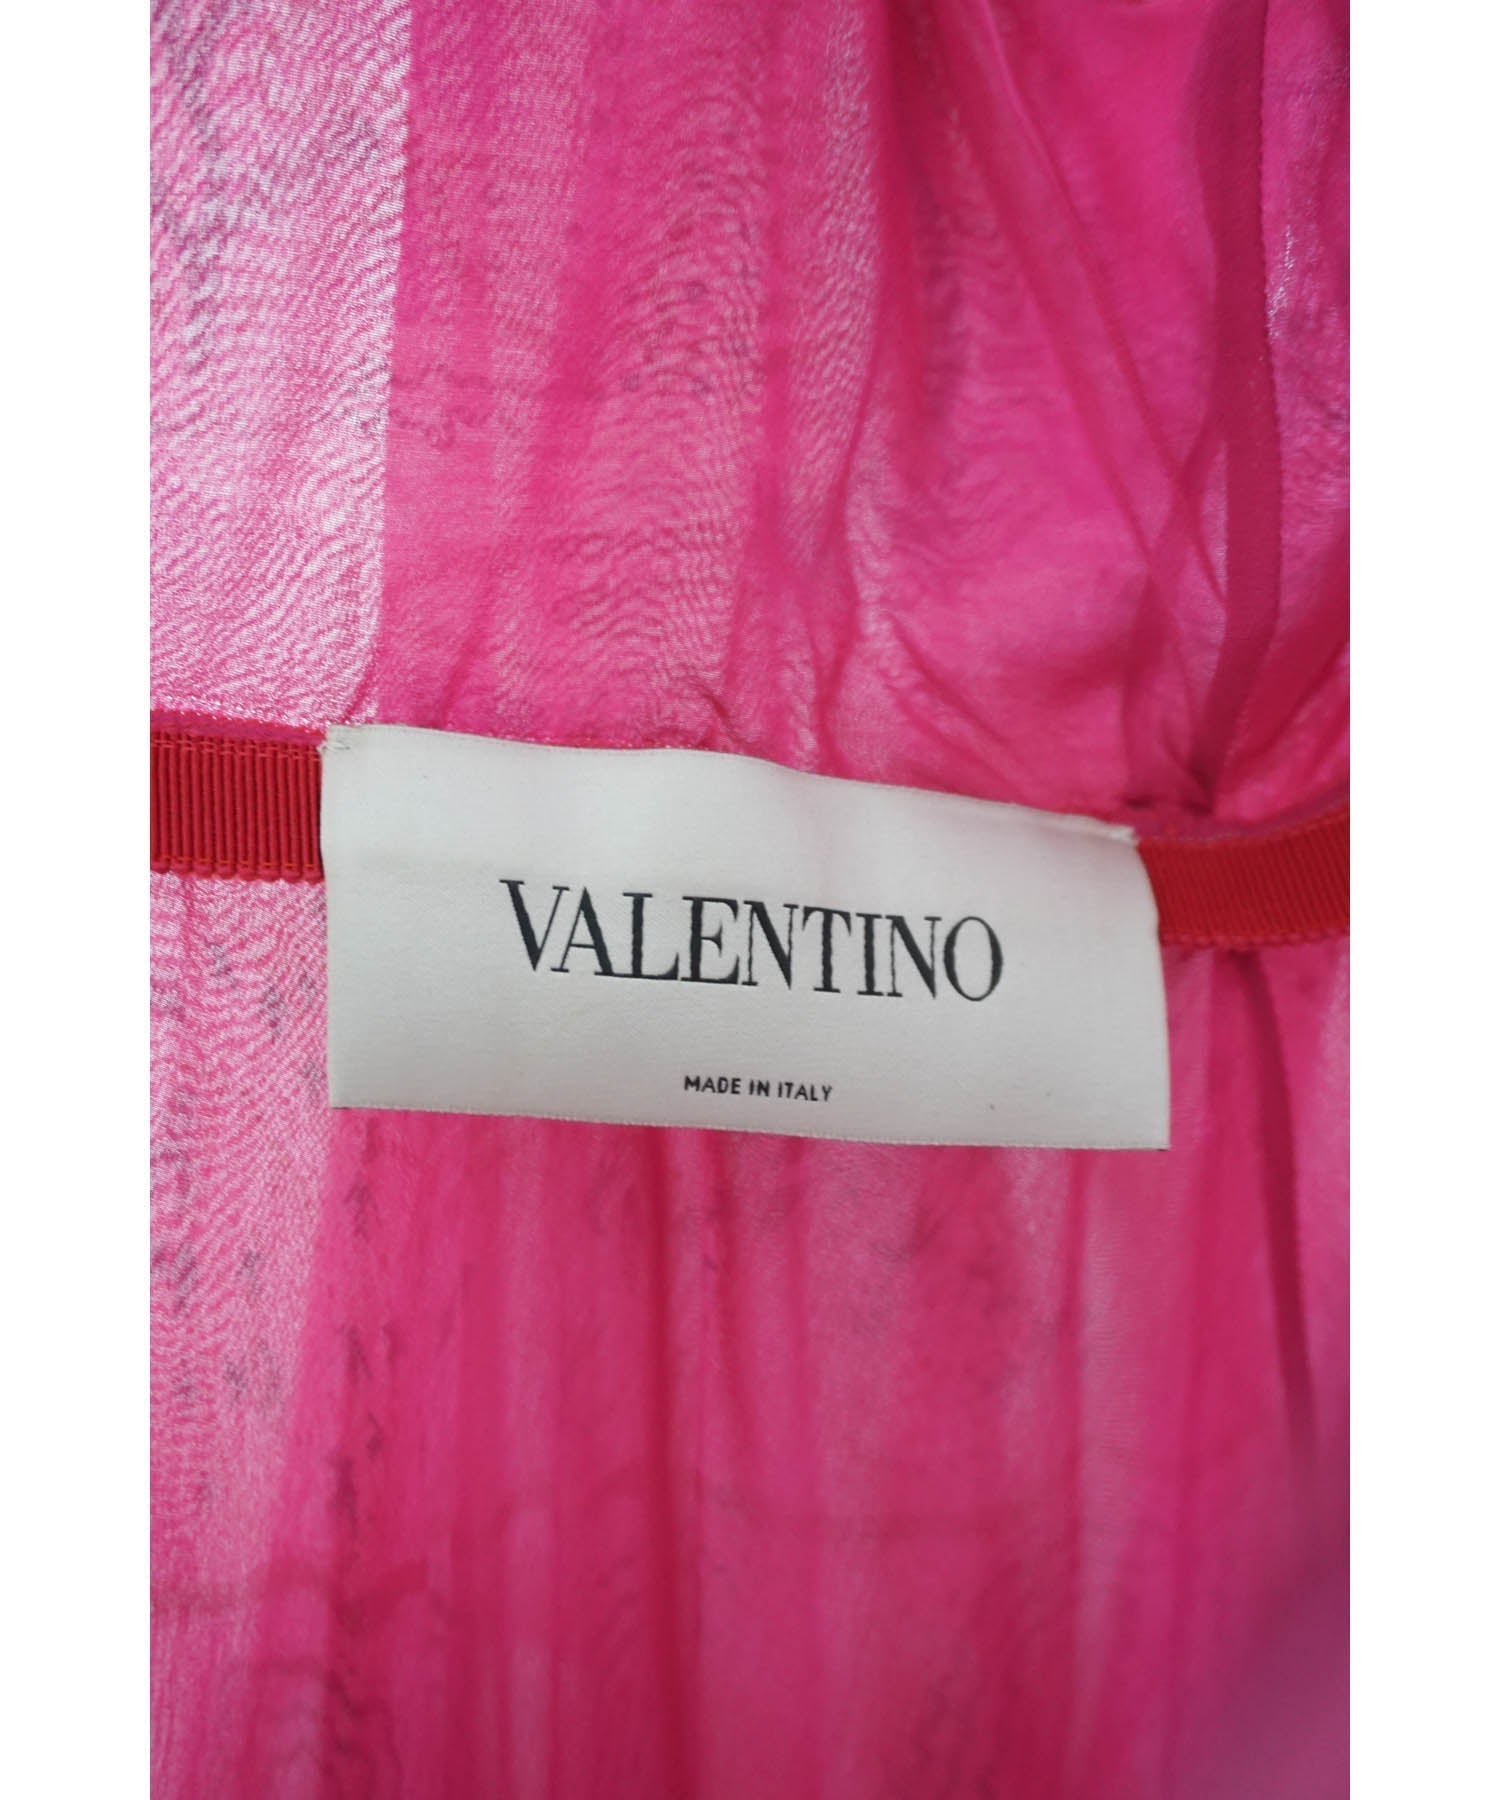 Valentino Maxi Dress SS 2017 Look 44